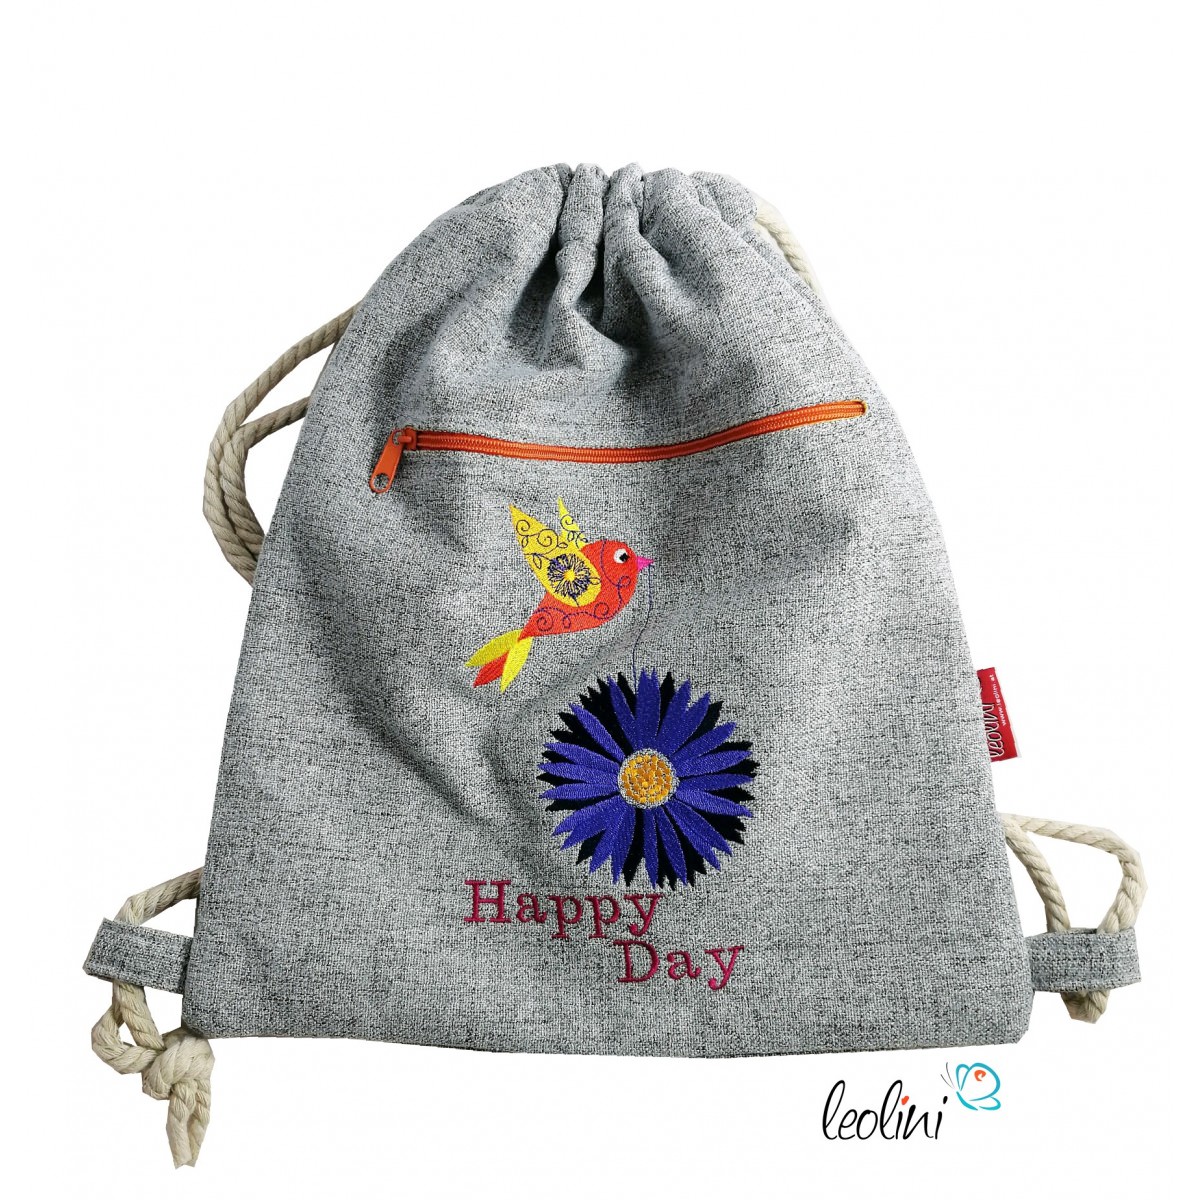 Handmade Sportbeutel Gymbag mit Stickerei Happy Day